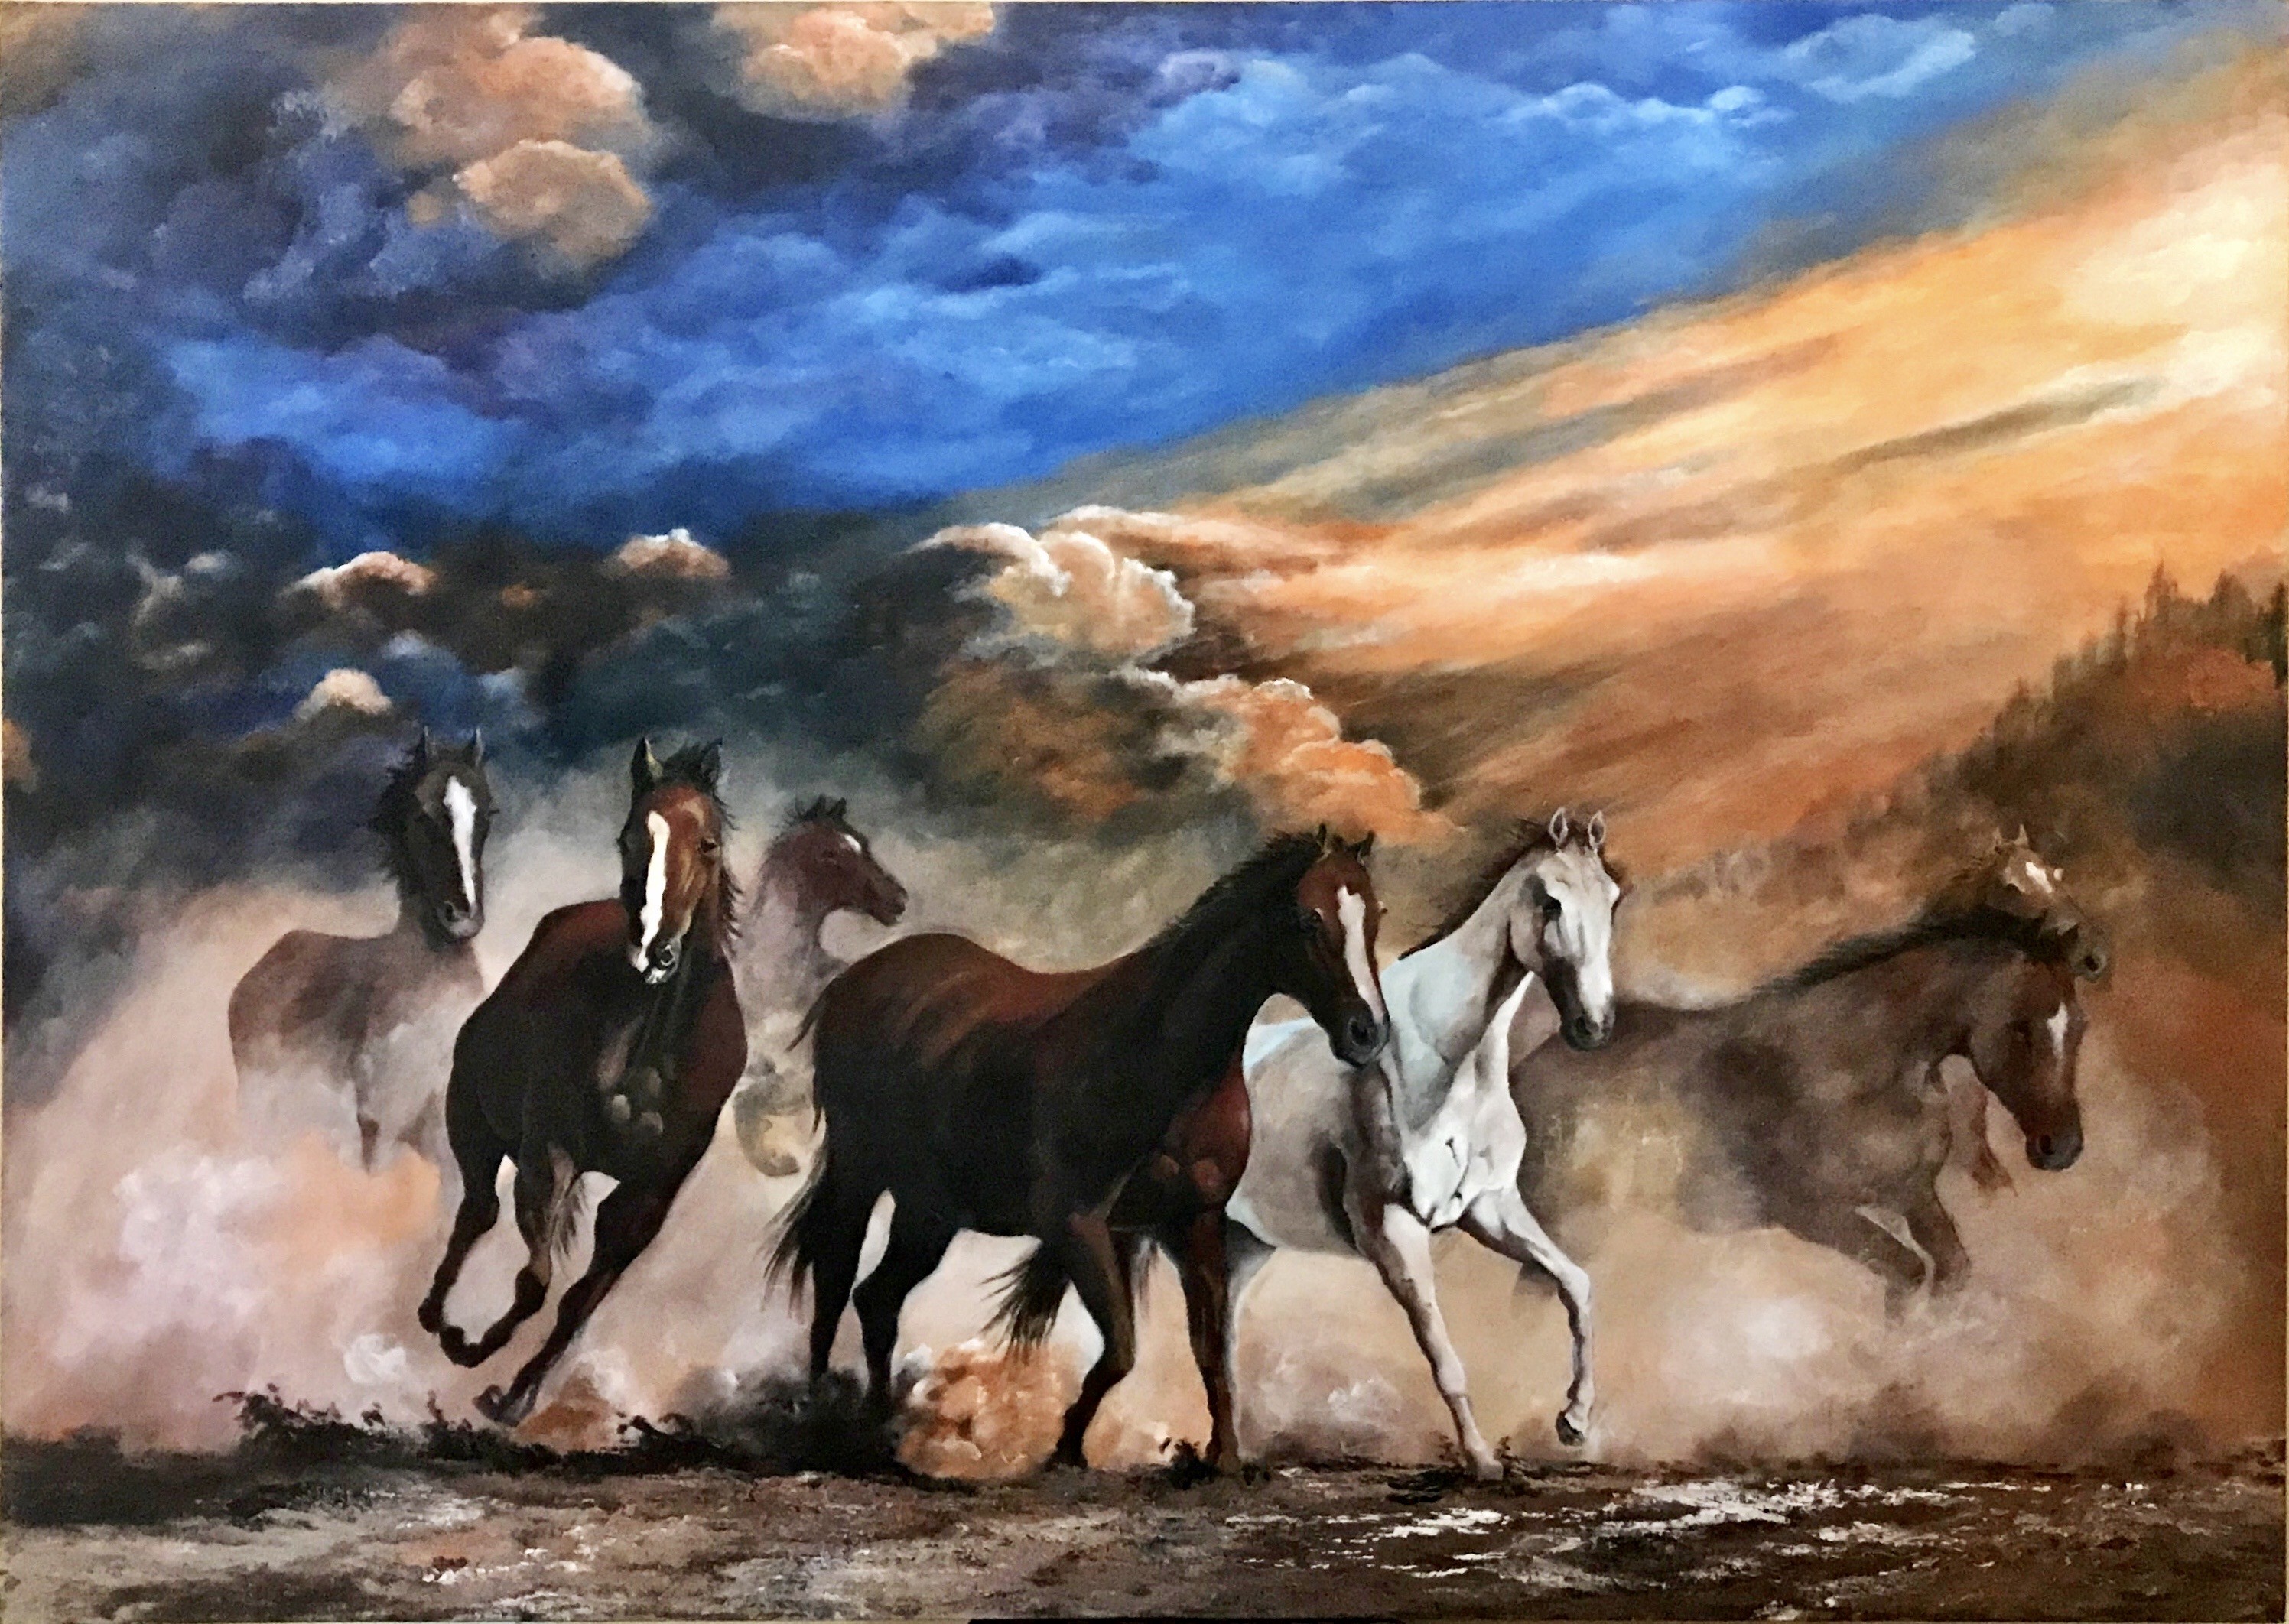 Stallions by Samantha Wijesinghe